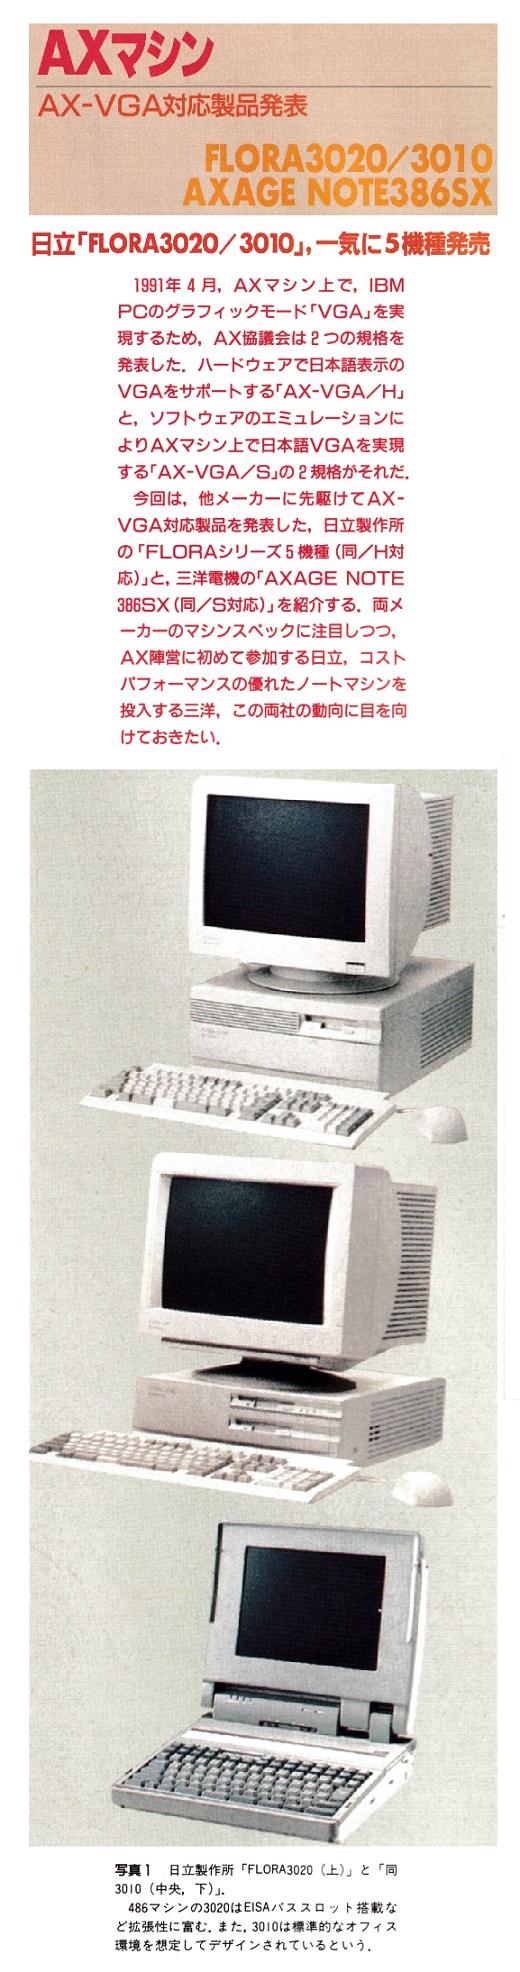 ASCII1991(07)c18FLORA_W520.jpg